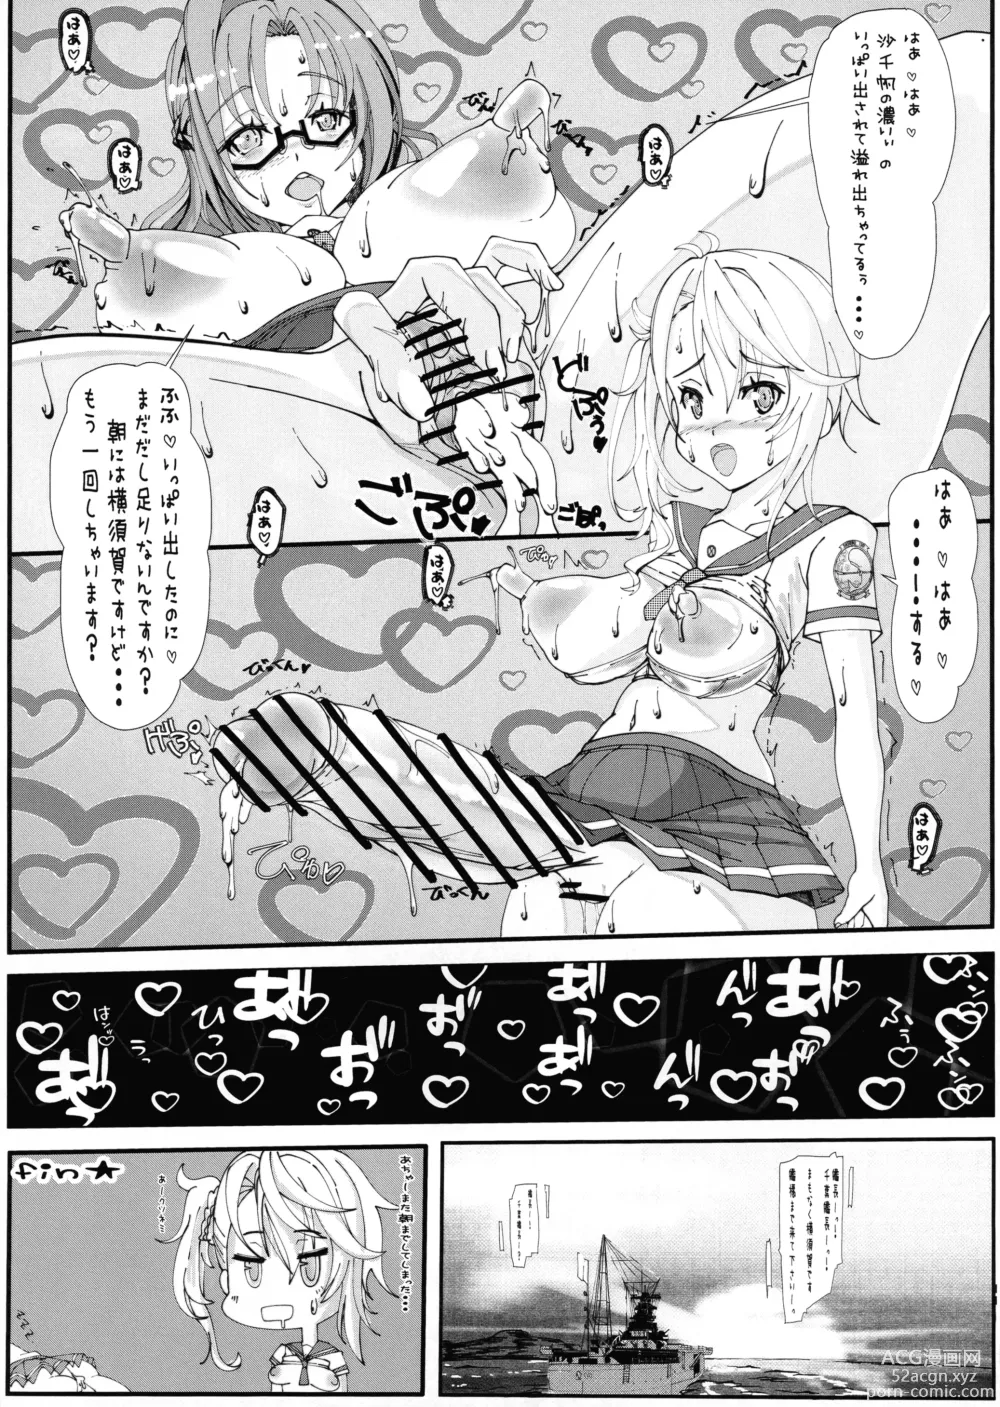 Page 10 of doujinshi Hae furi spirits mod.9.0